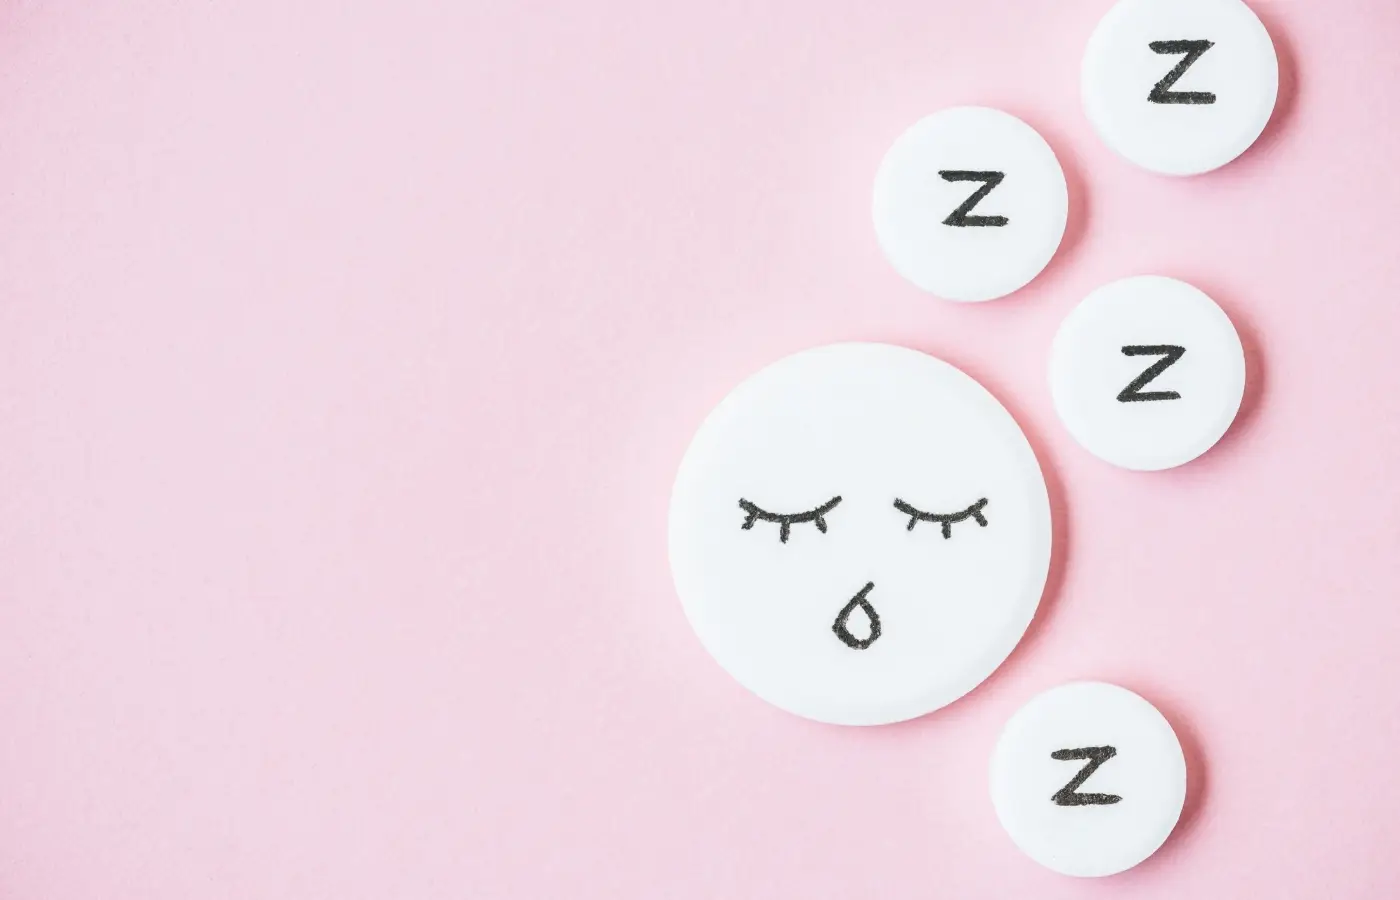 Buttons illustrating sleep